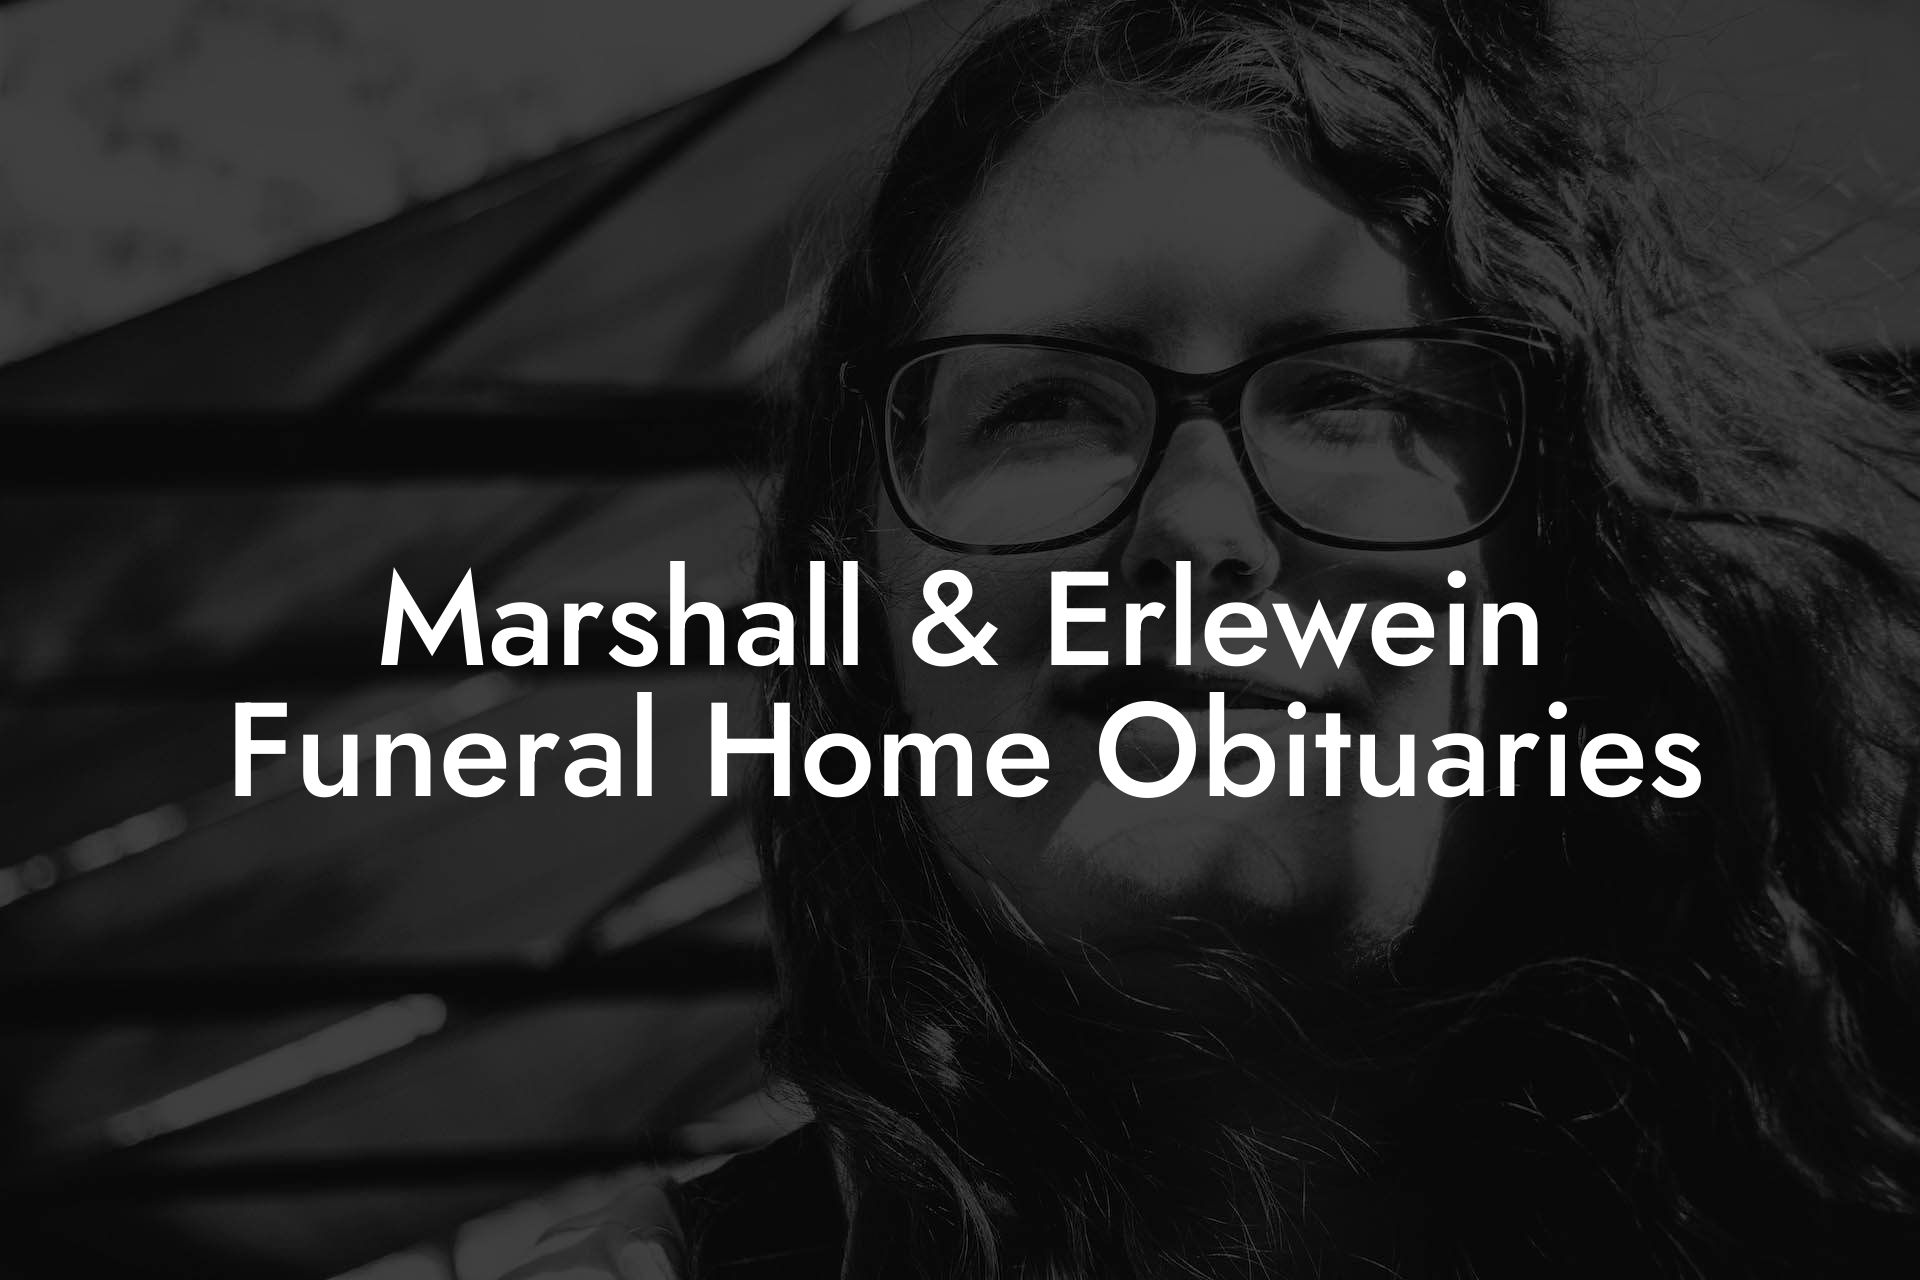 Marshall & Erlewein Funeral Home Obituaries